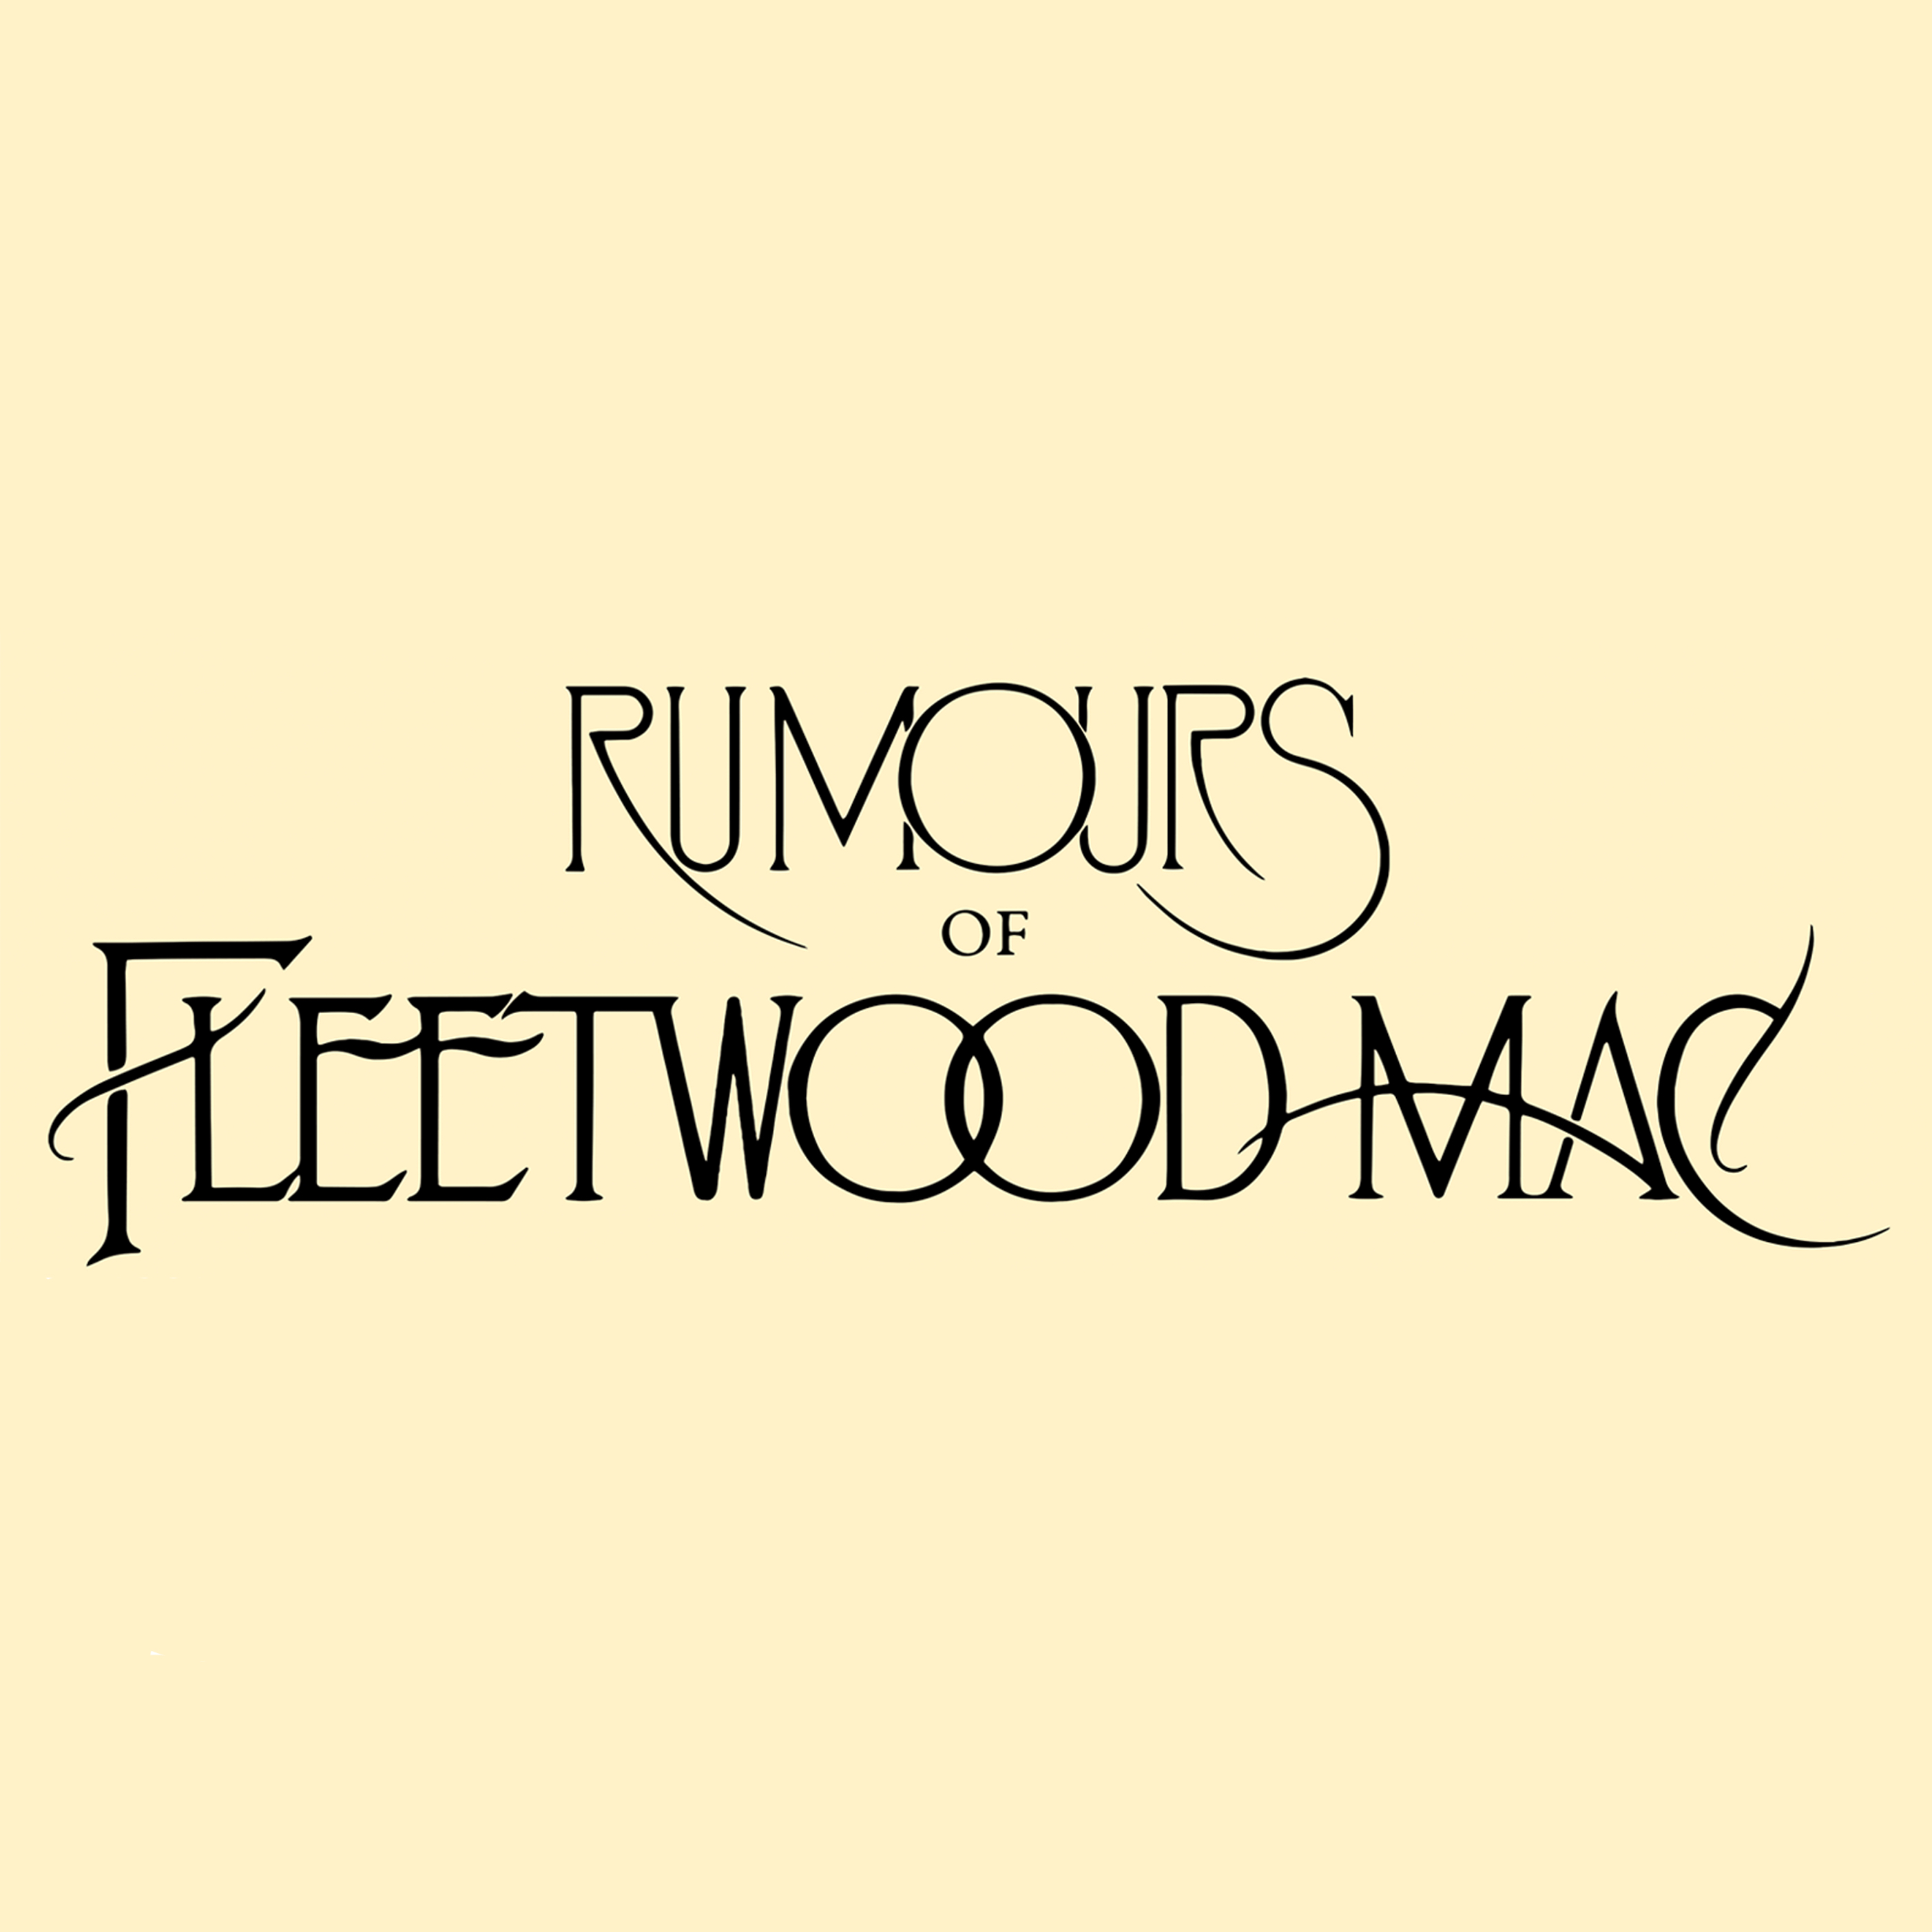 fleetwood mac tour dates canada